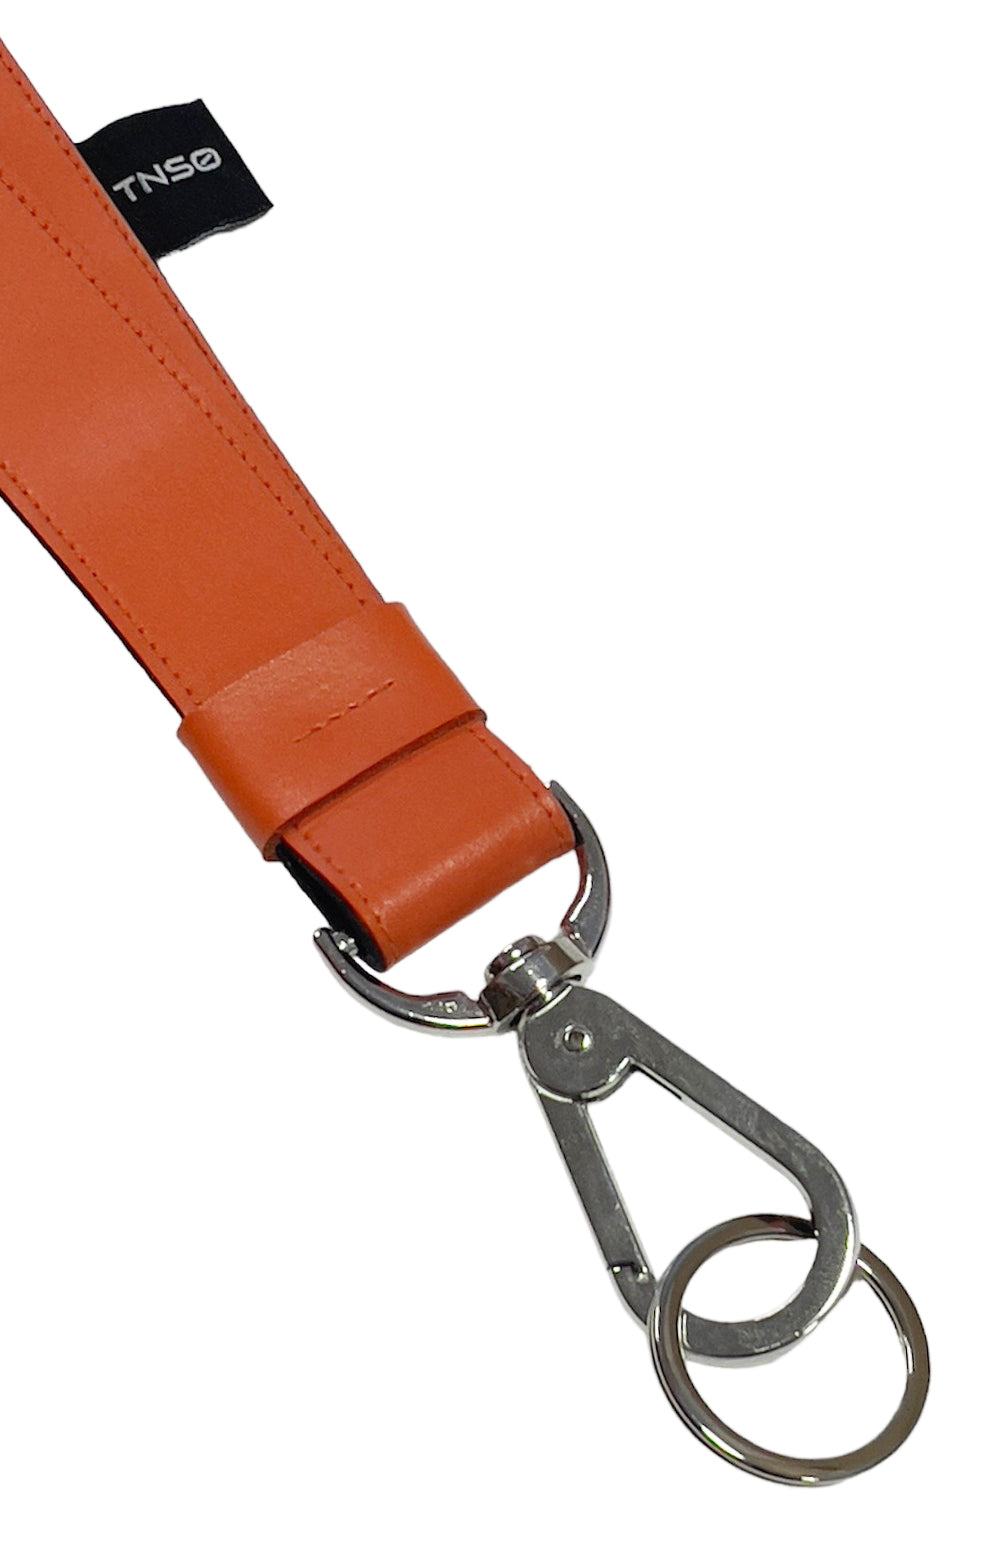  Tnso Portachiavi Leather Lanyard Limited Edition Orange Arancione Uomo - 3